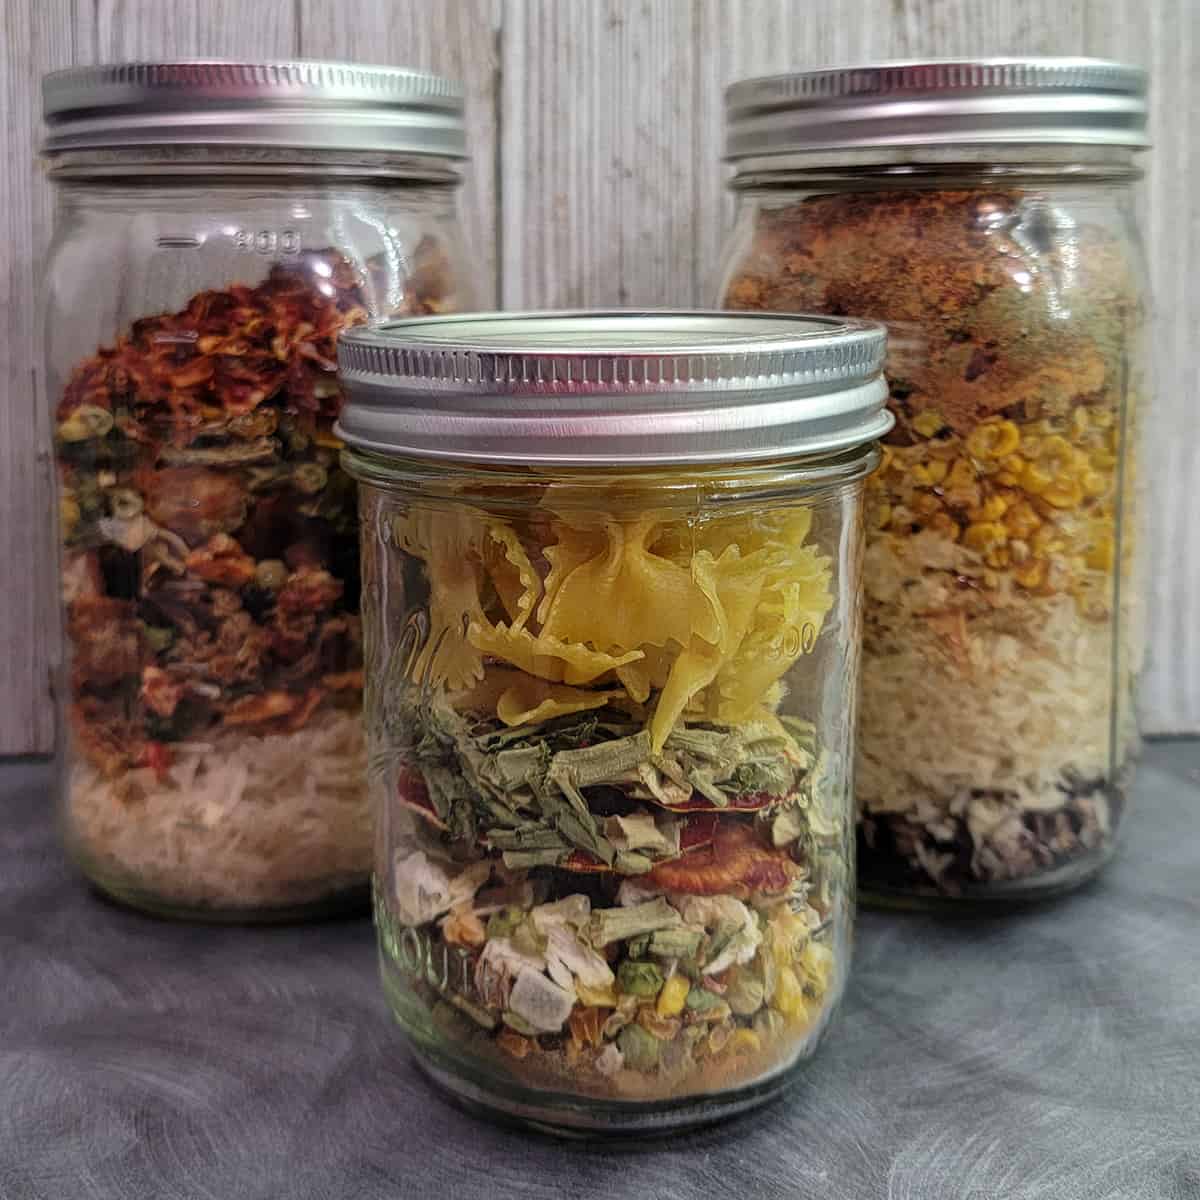 Best Meals in a Jar Recipes